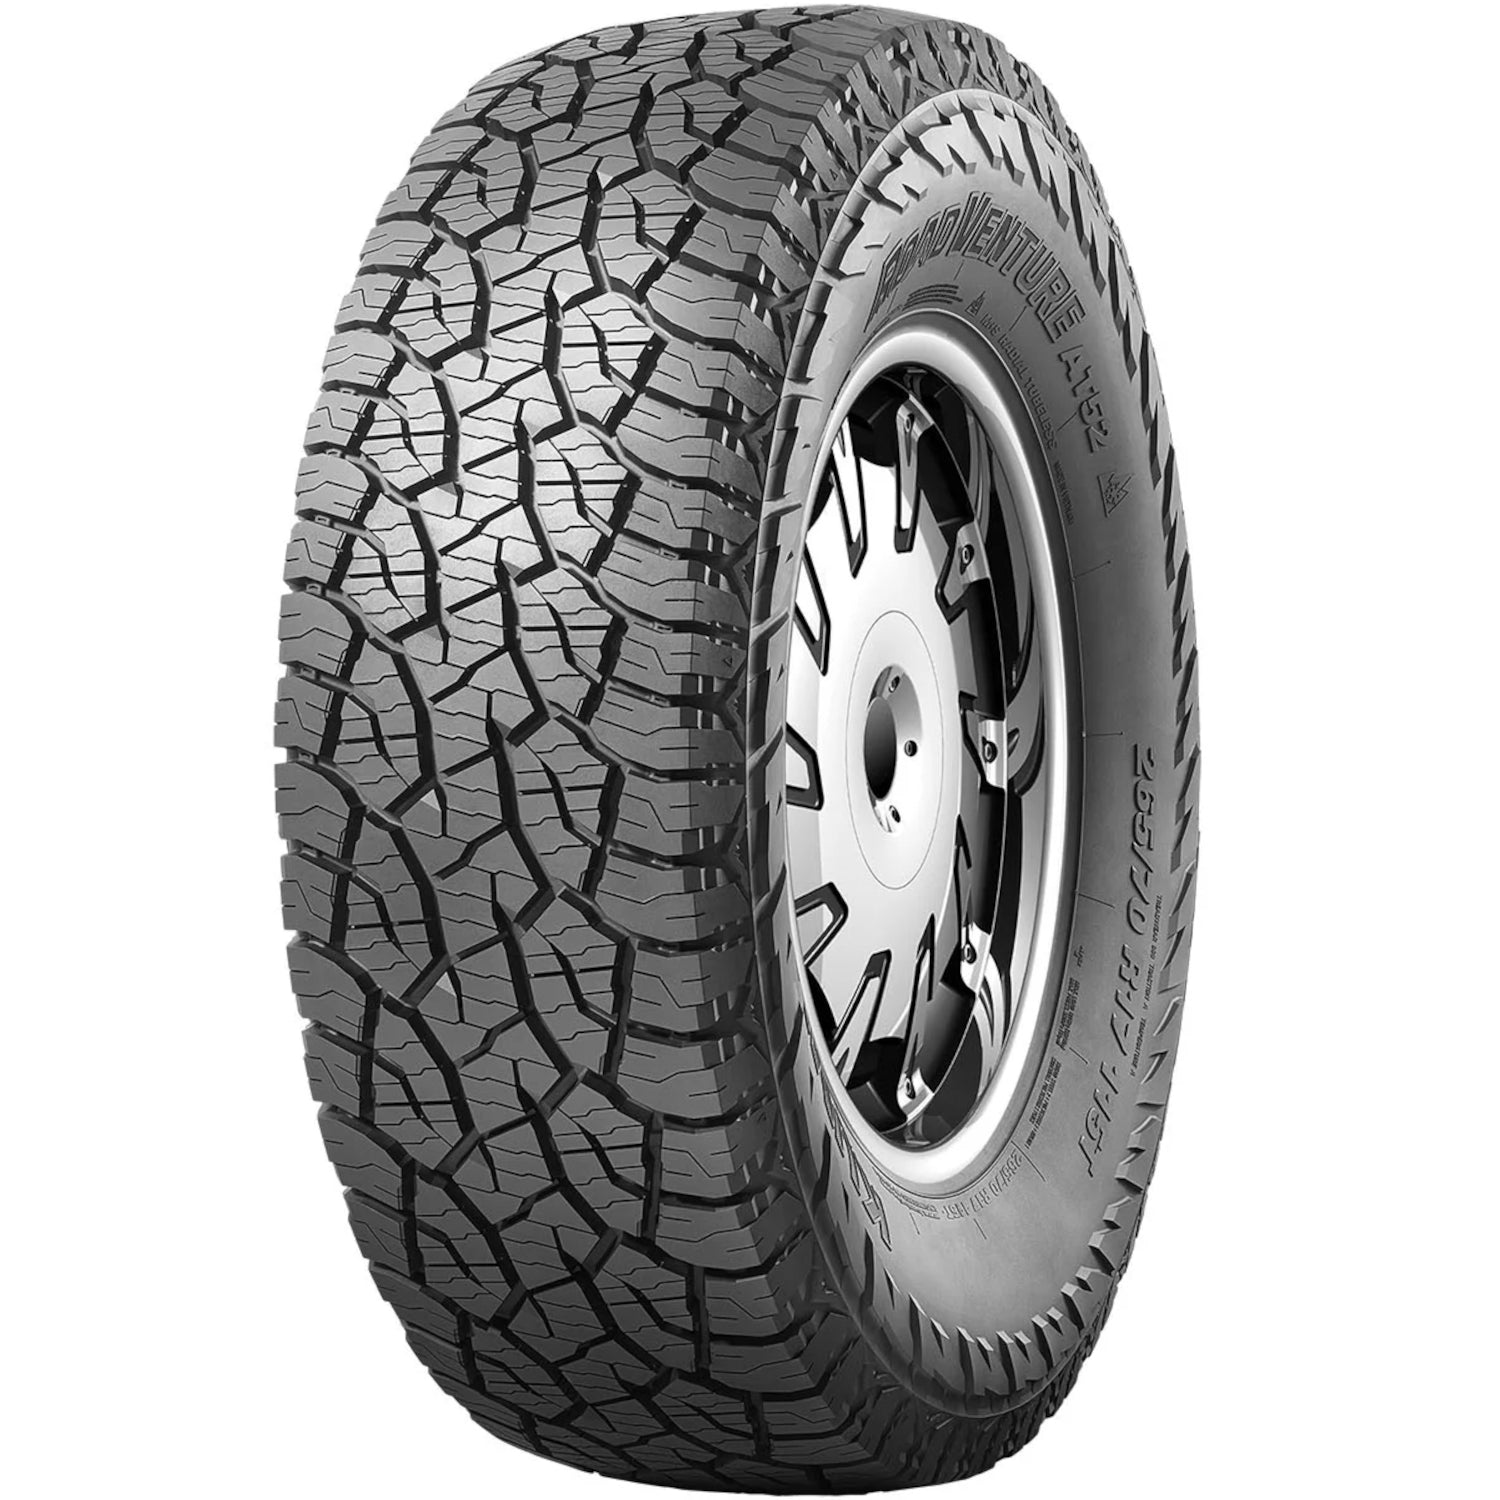 KUMHO ROAD VENTURE AT52 LT285/60R20 (33.5X11.2R 20) Tires